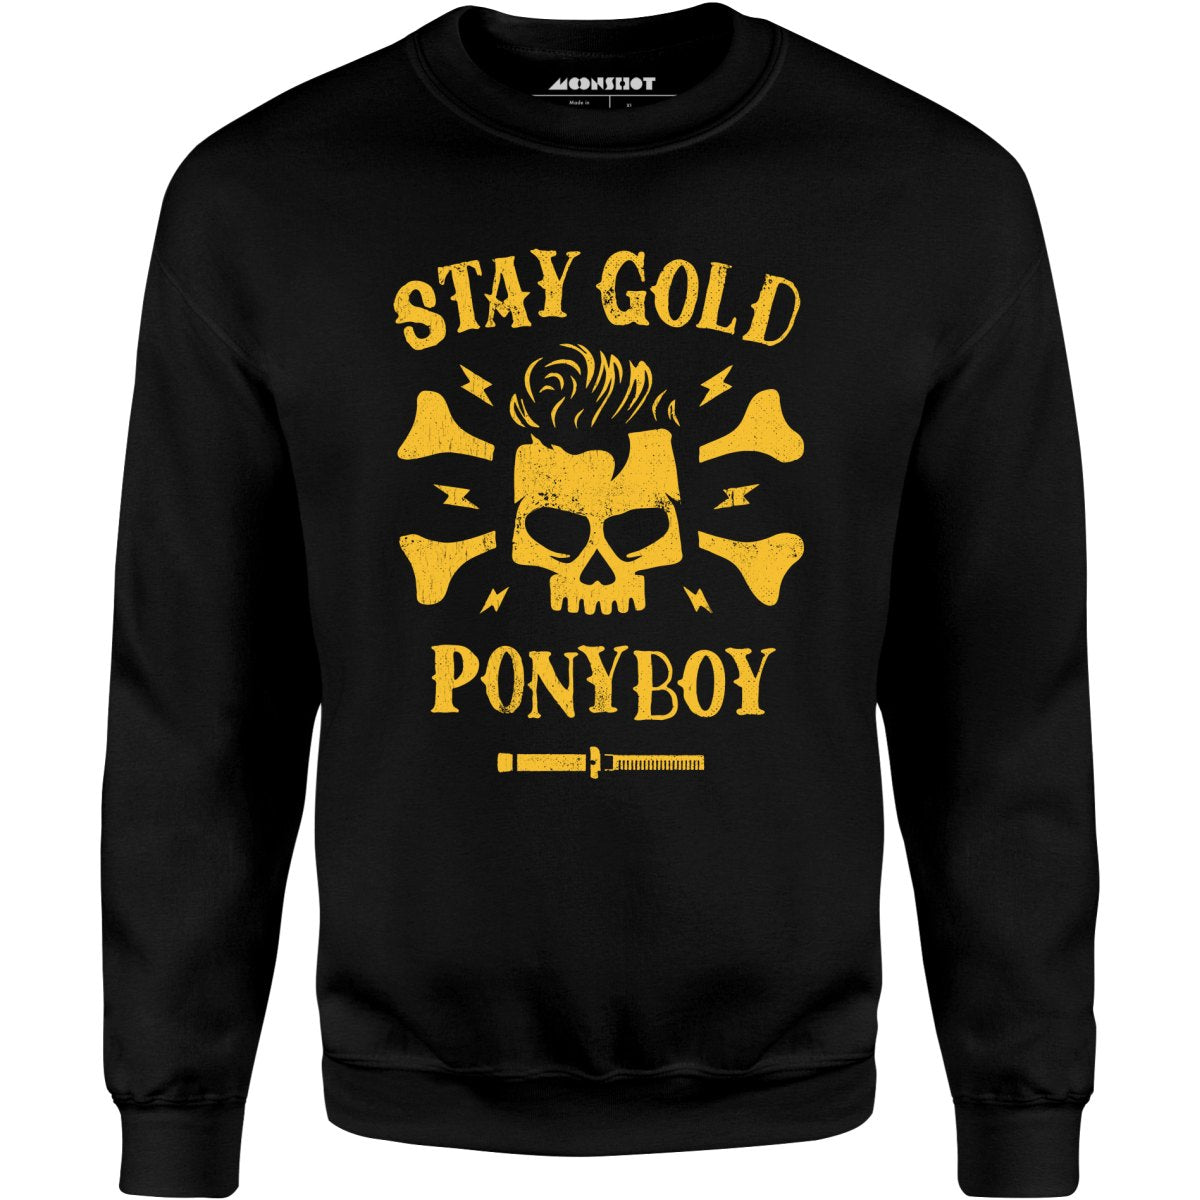 Stay Gold Ponyboy - Unisex Sweatshirt